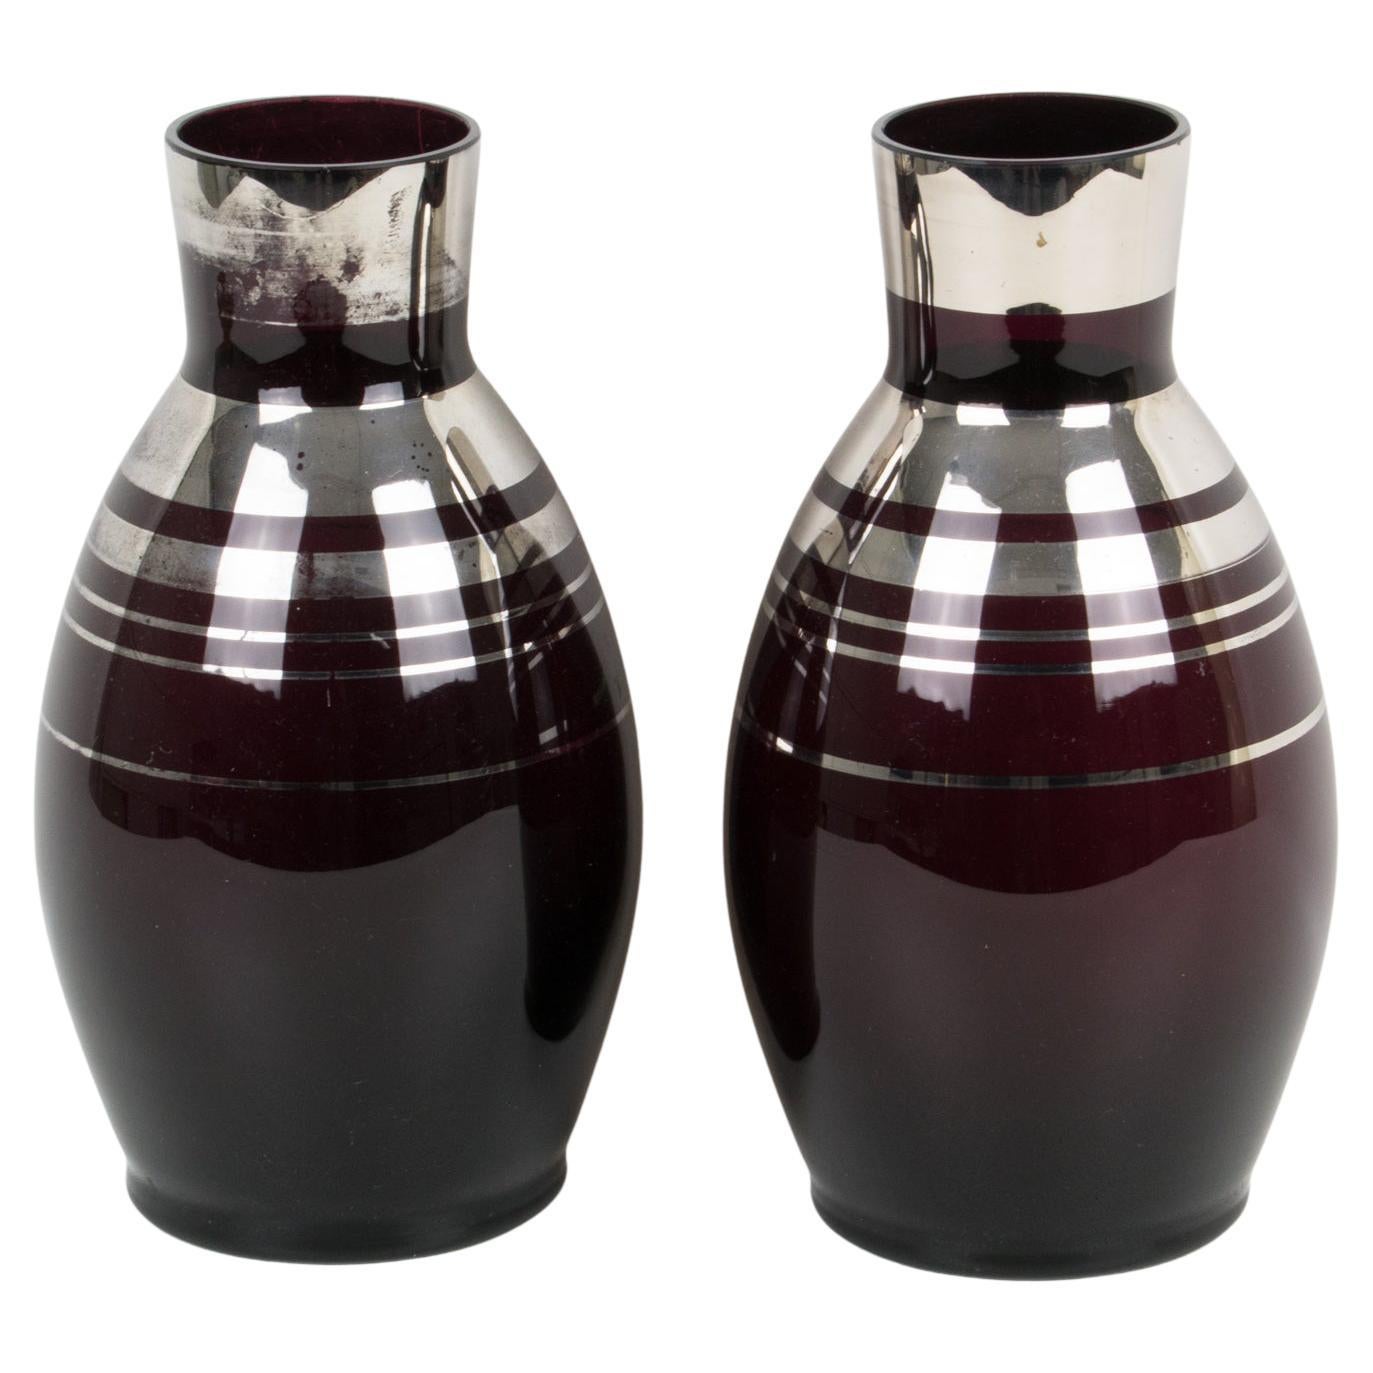 Fains Art Deco Silver Overlay Black Opaline Glass Vase, a pair, 1930s